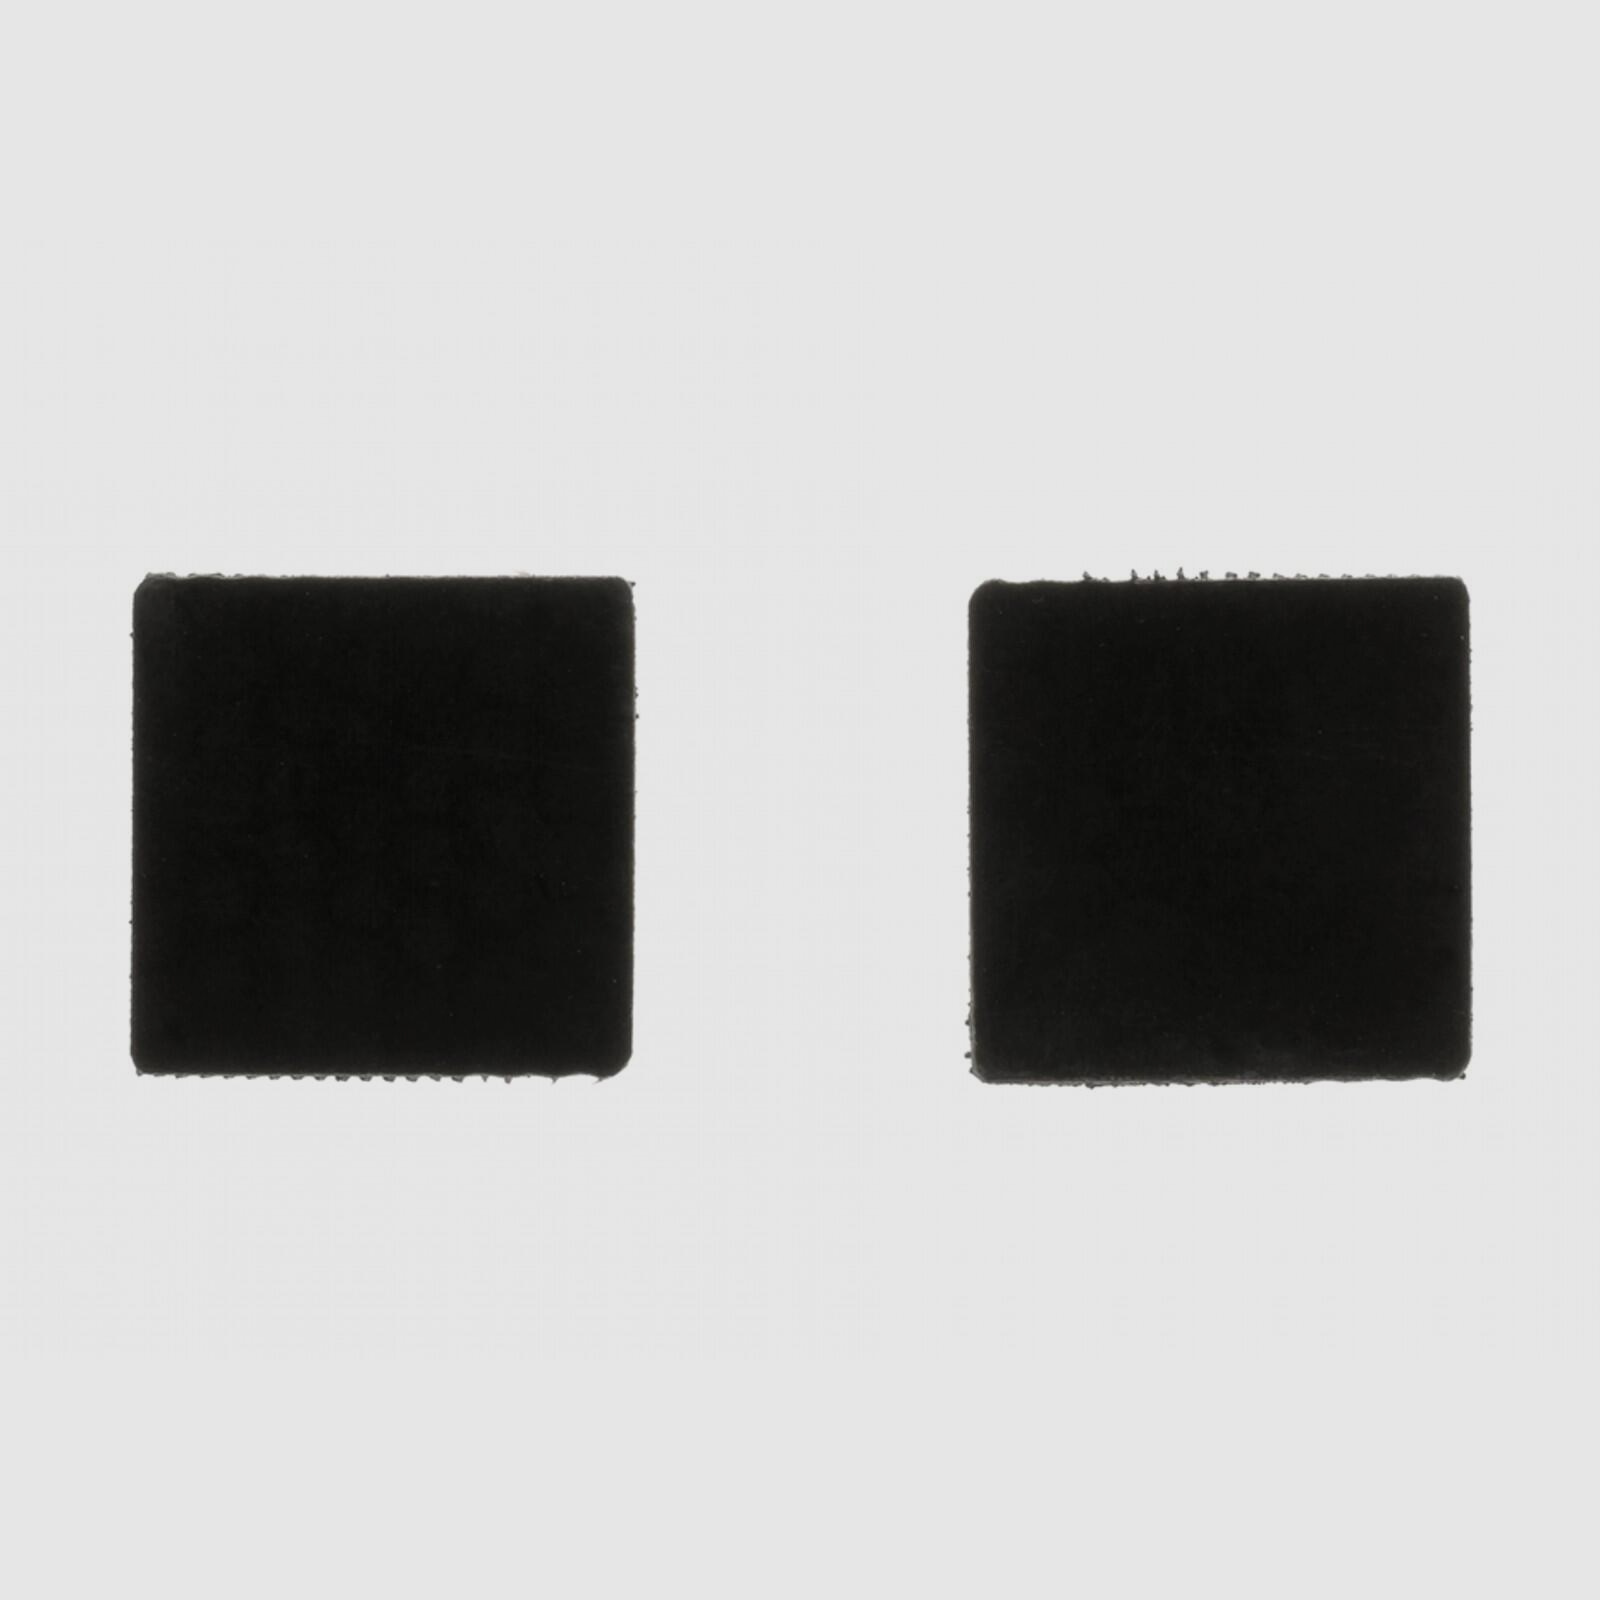 Clawgear IR Reflective Patch 2.5x2.5cm 2-Pack